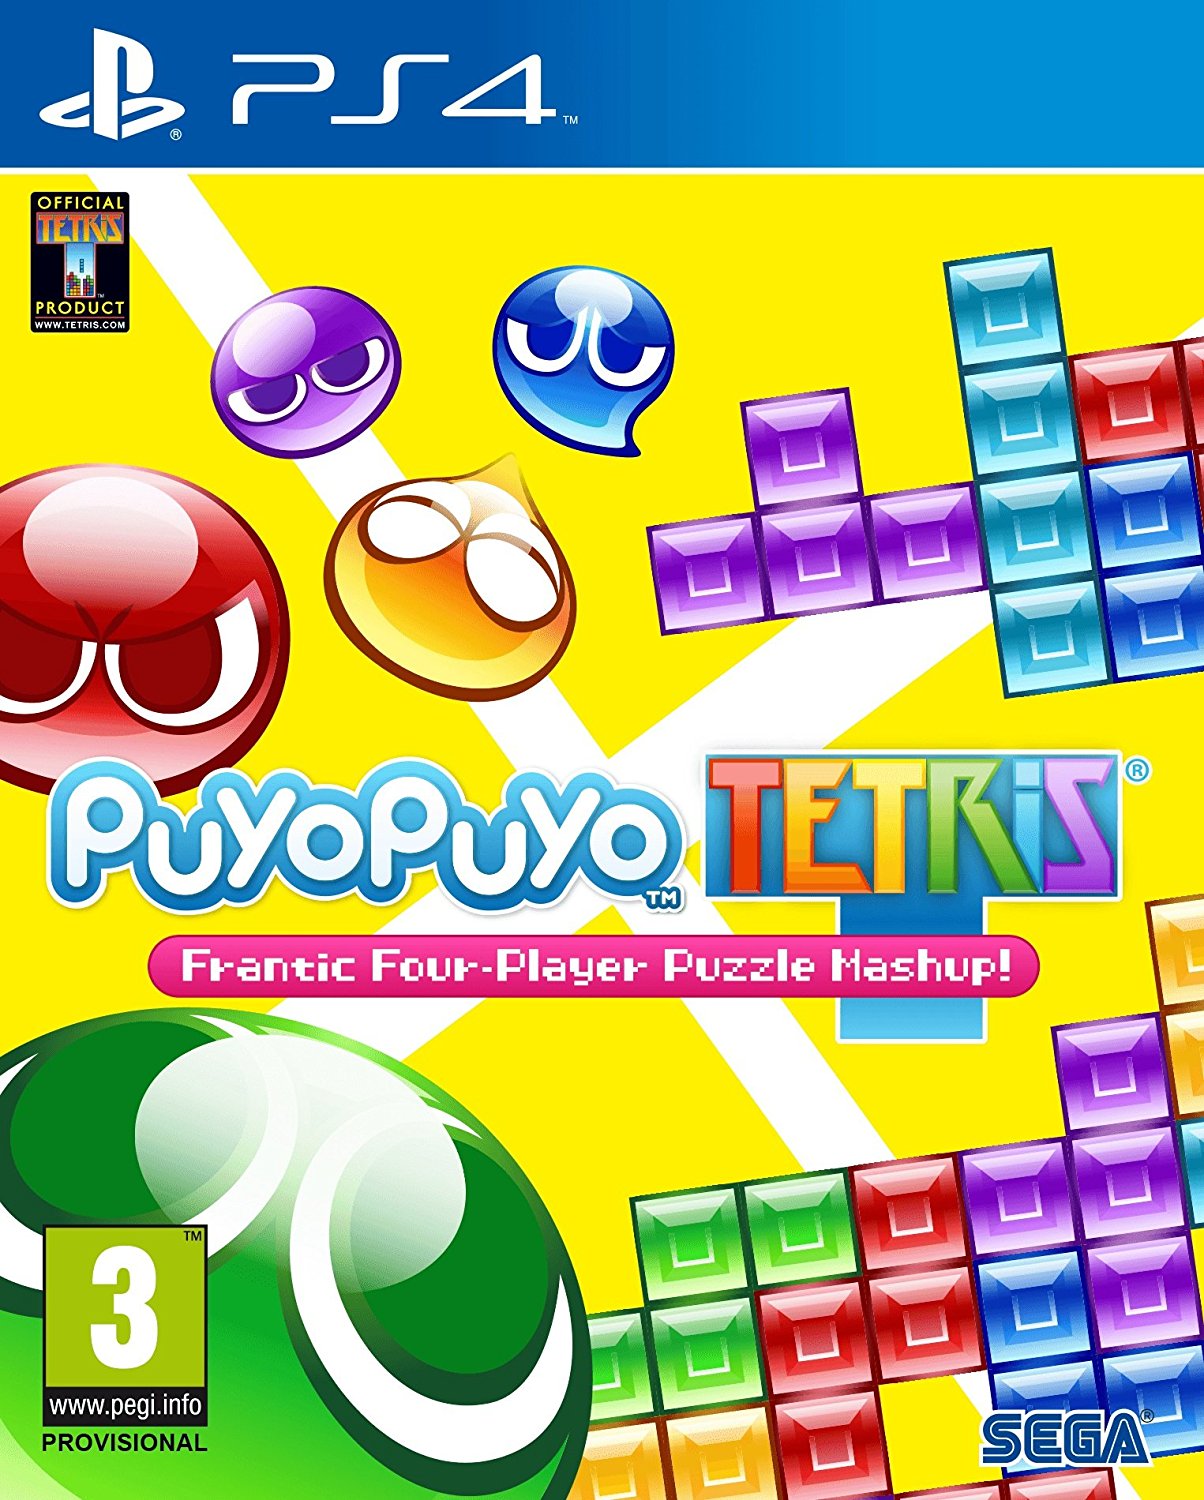 jaquette du jeu vidéo Puyo Puyo Tetris